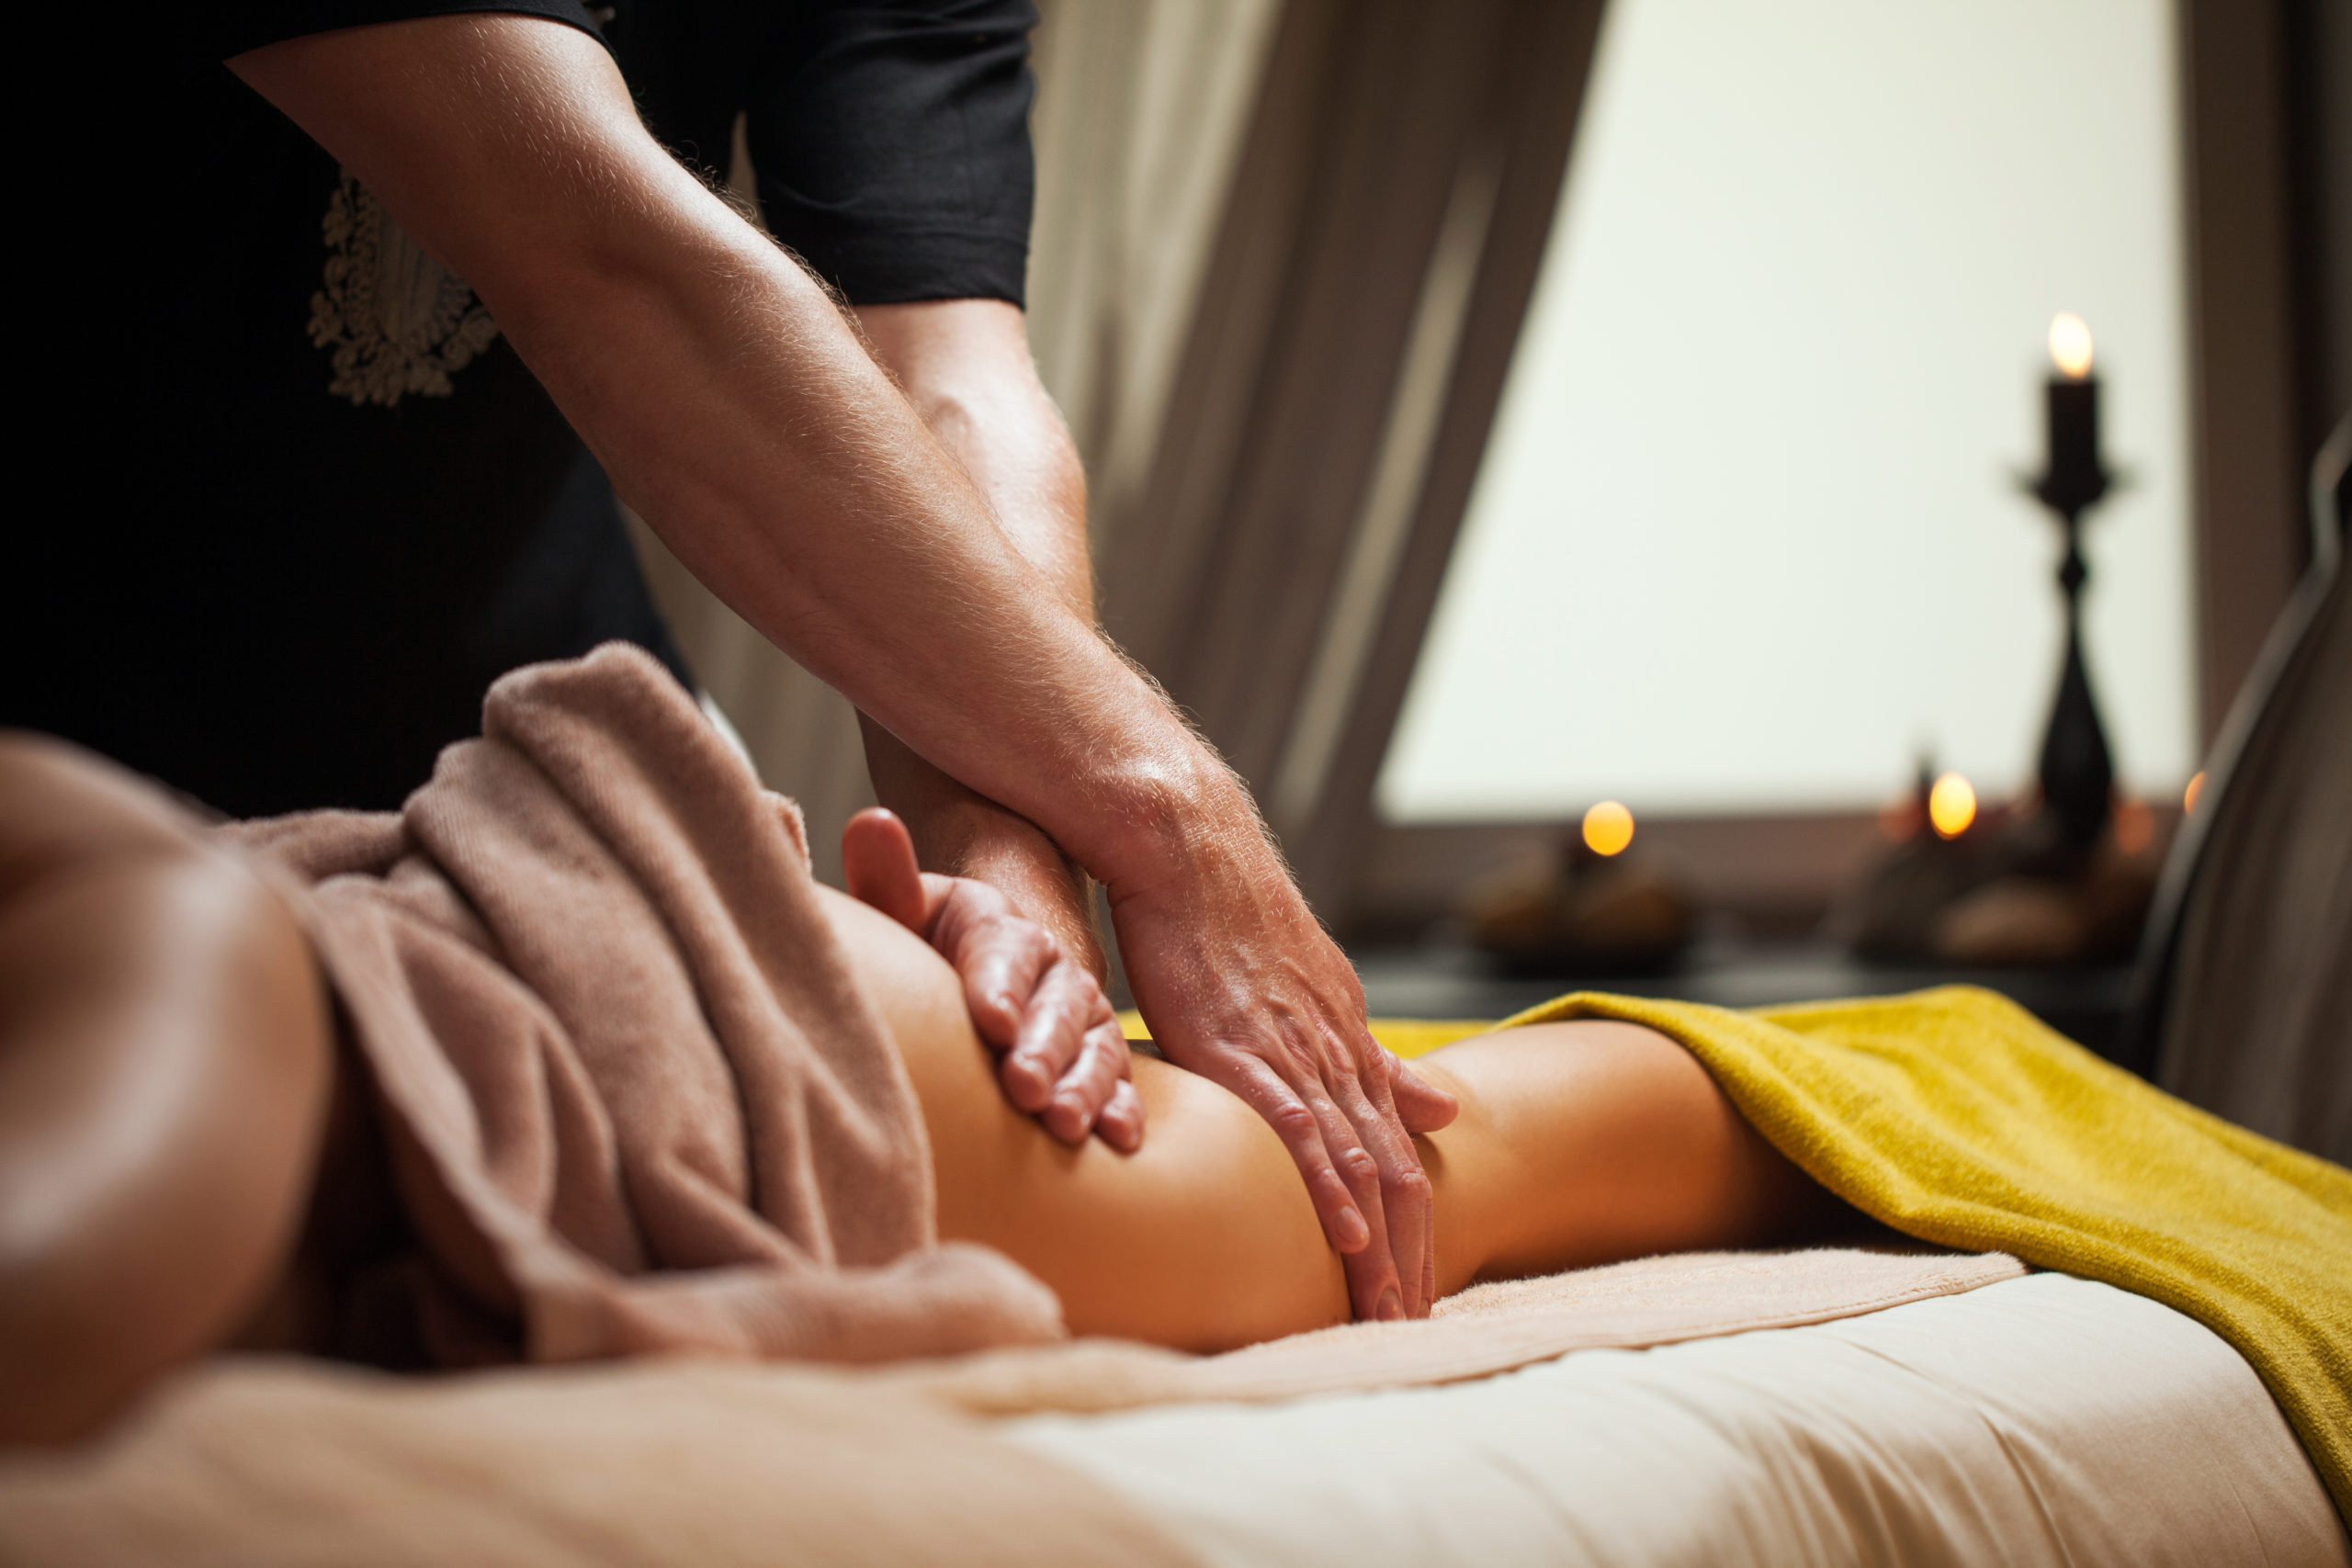 Anti cellulite massage in a luxury spa